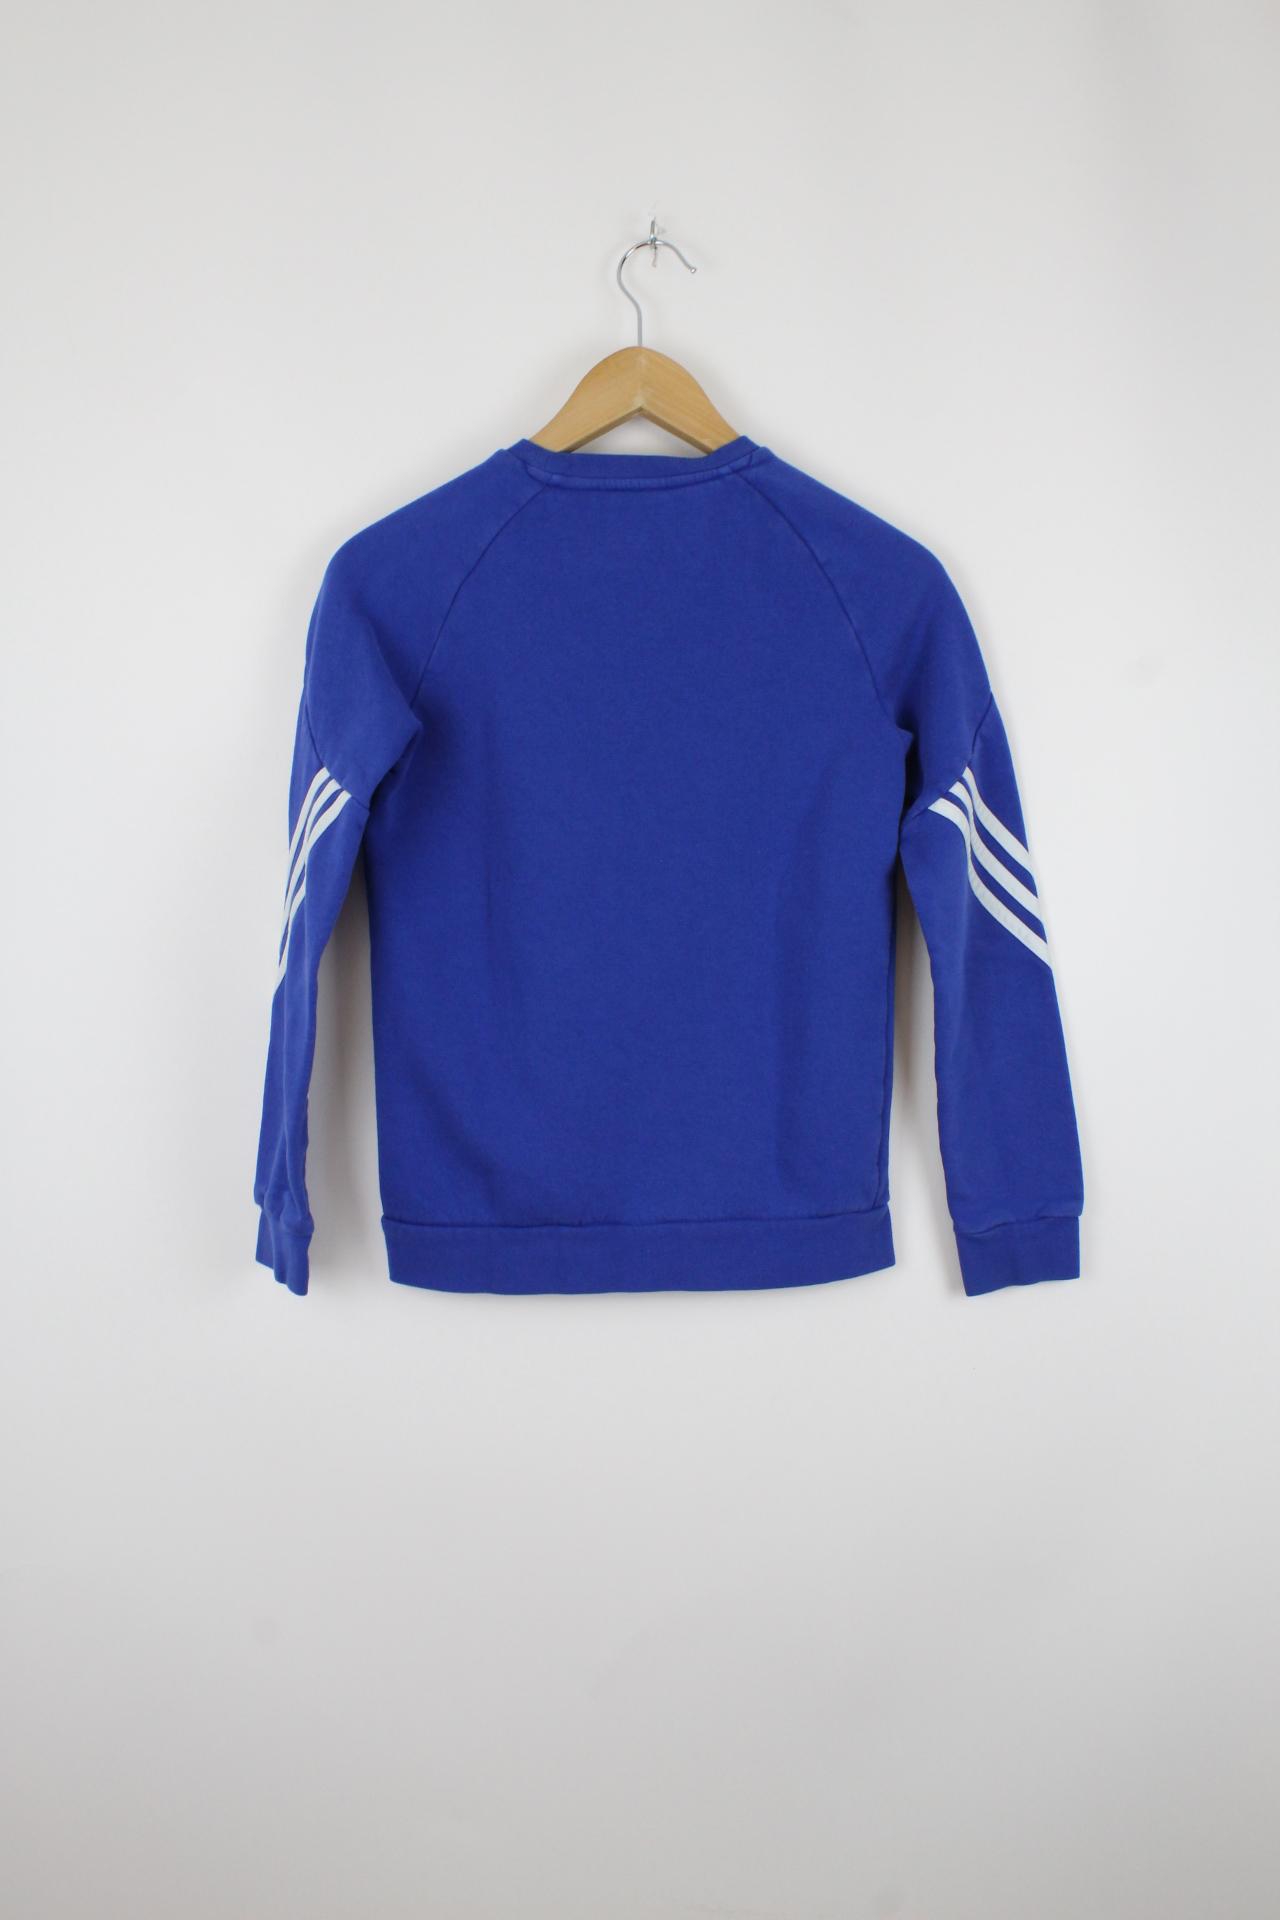 Vintage Adidas Sweater - XS